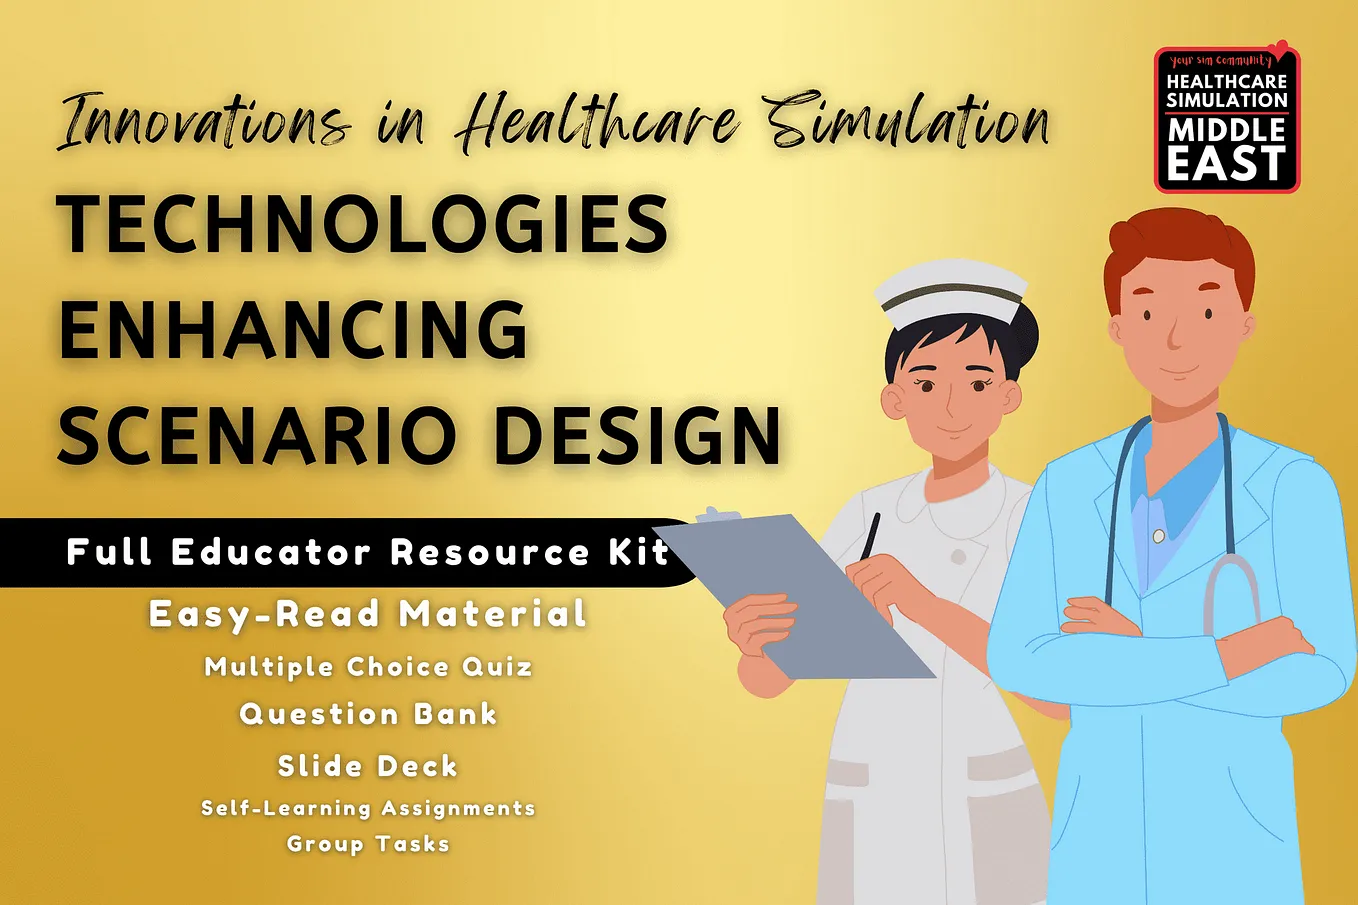 Technologies Enhancing Scenario Design: Innovations in Healthcare Simulation